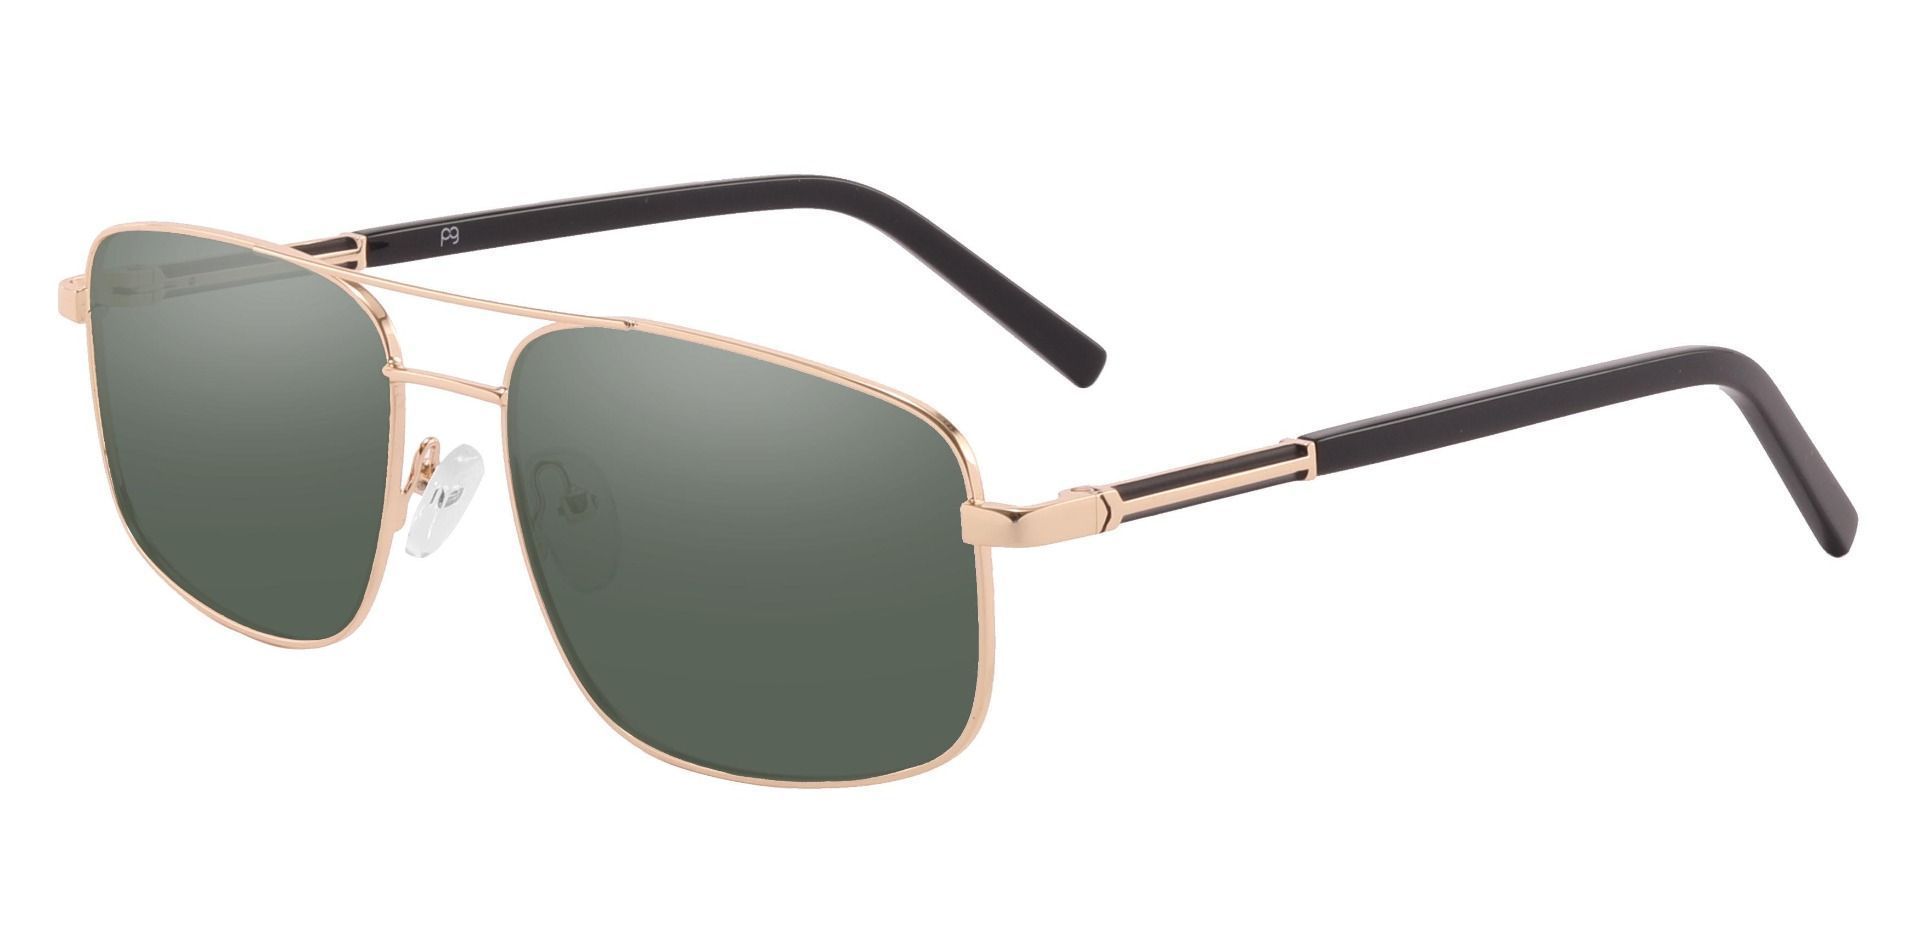 Davenport Aviator Non-Rx Sunglasses - Gold Frame With Green Lenses